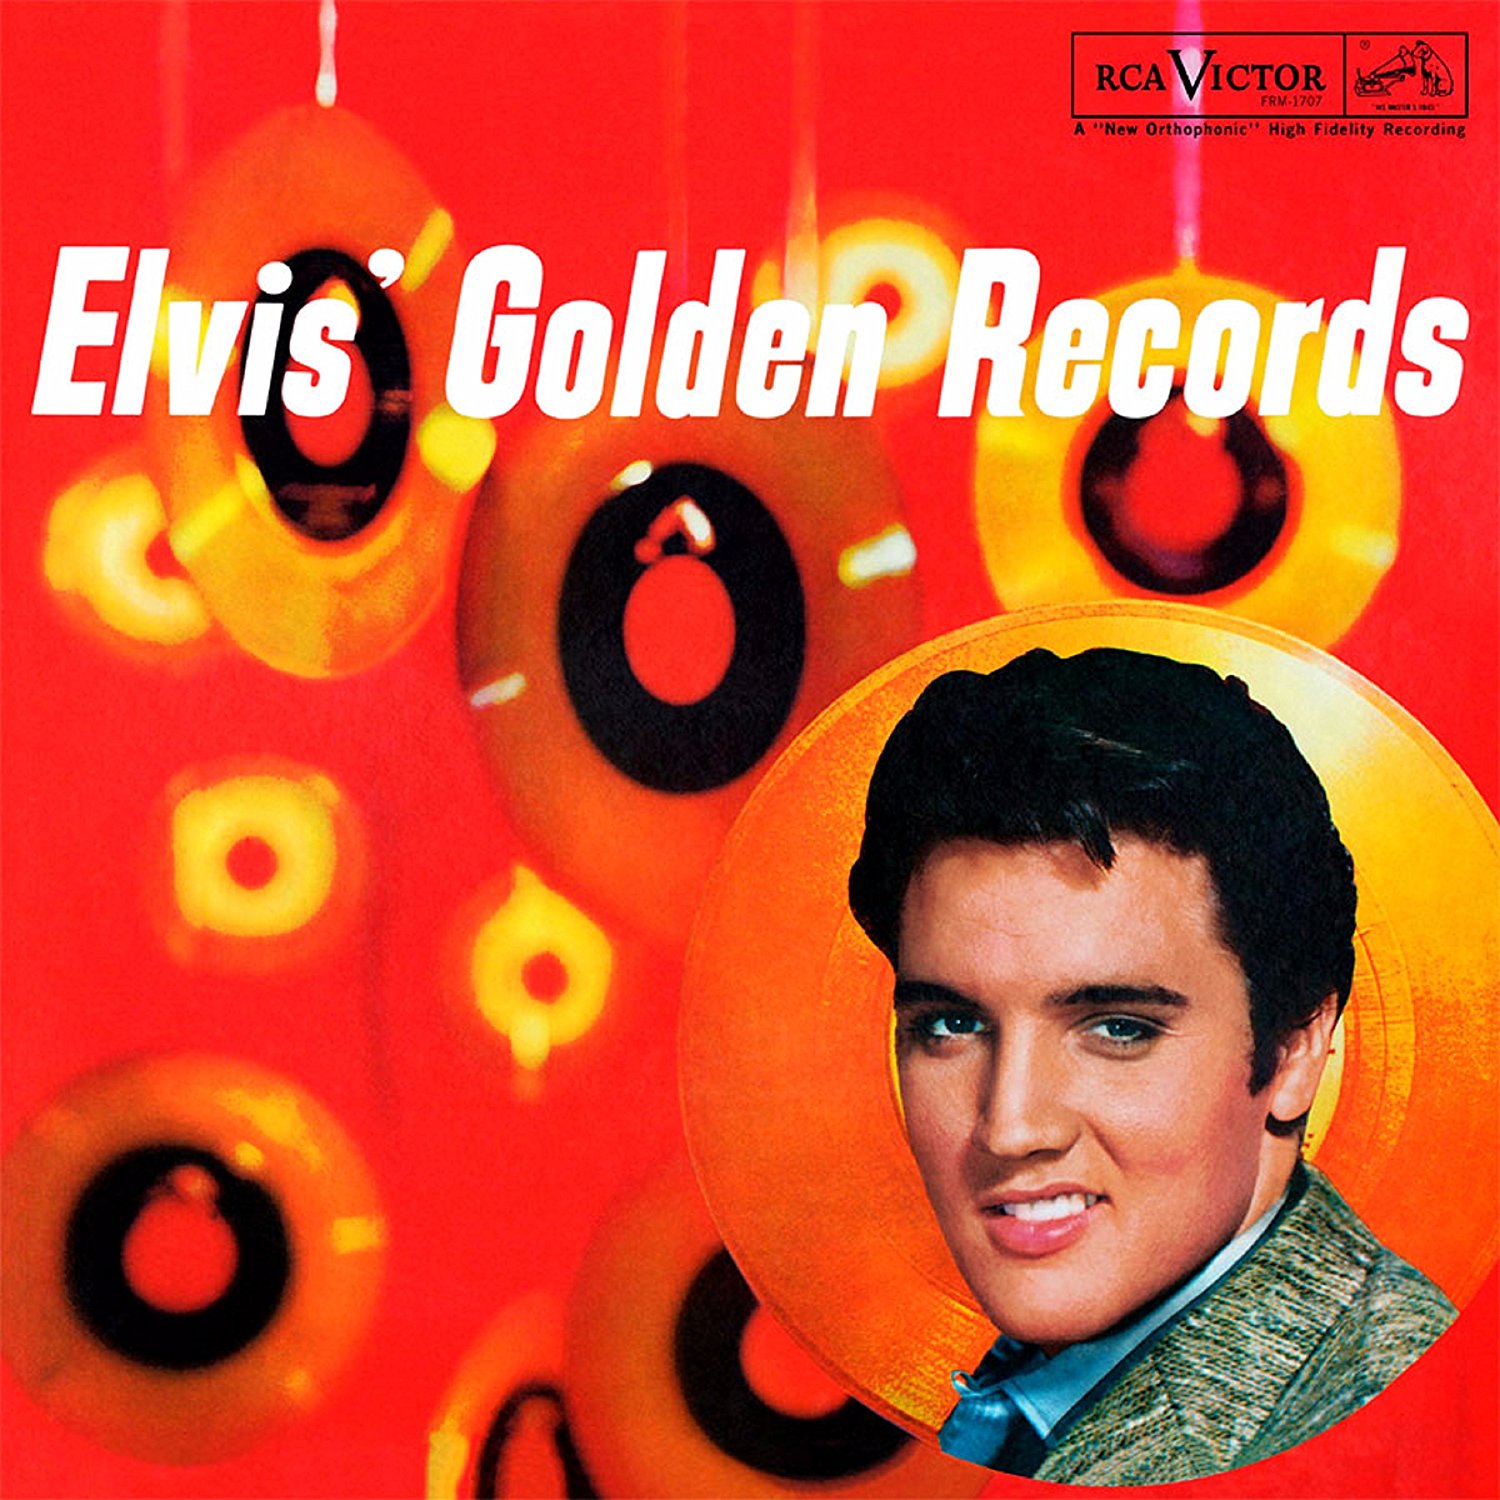 audio review : Elvis' Golden Records ( album ) ... Elvis Presley